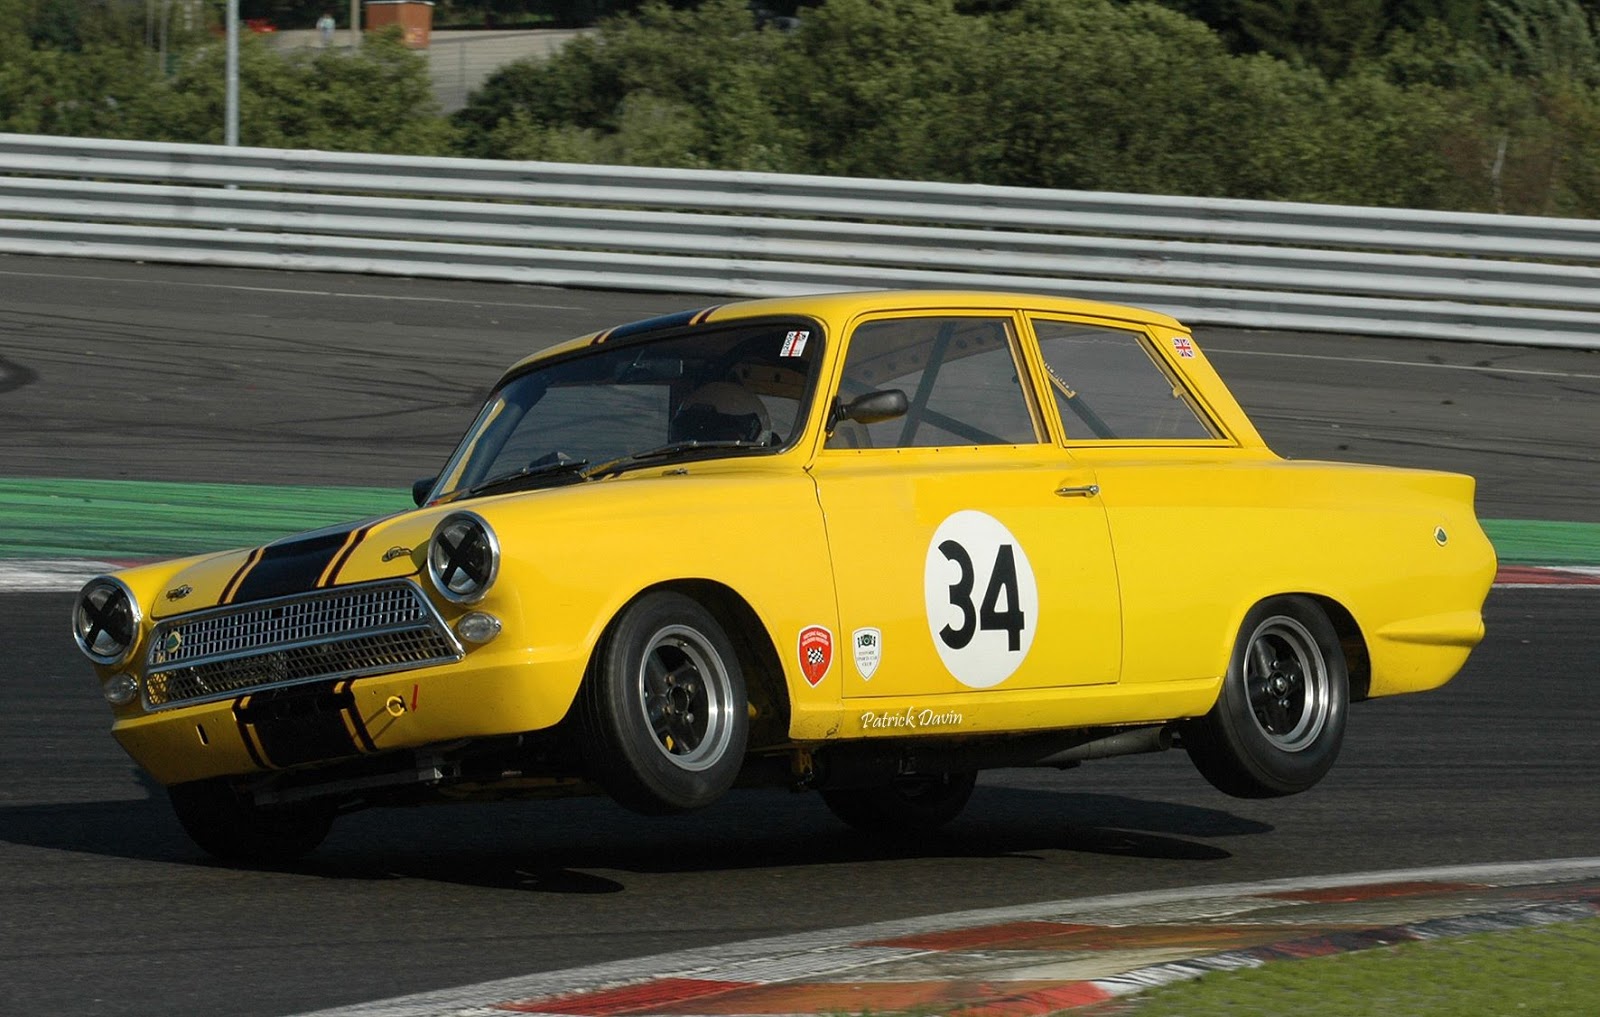 The racing bugler! Blog do Lacombe: Fotos de carros de corrida antigos são  facinantes!